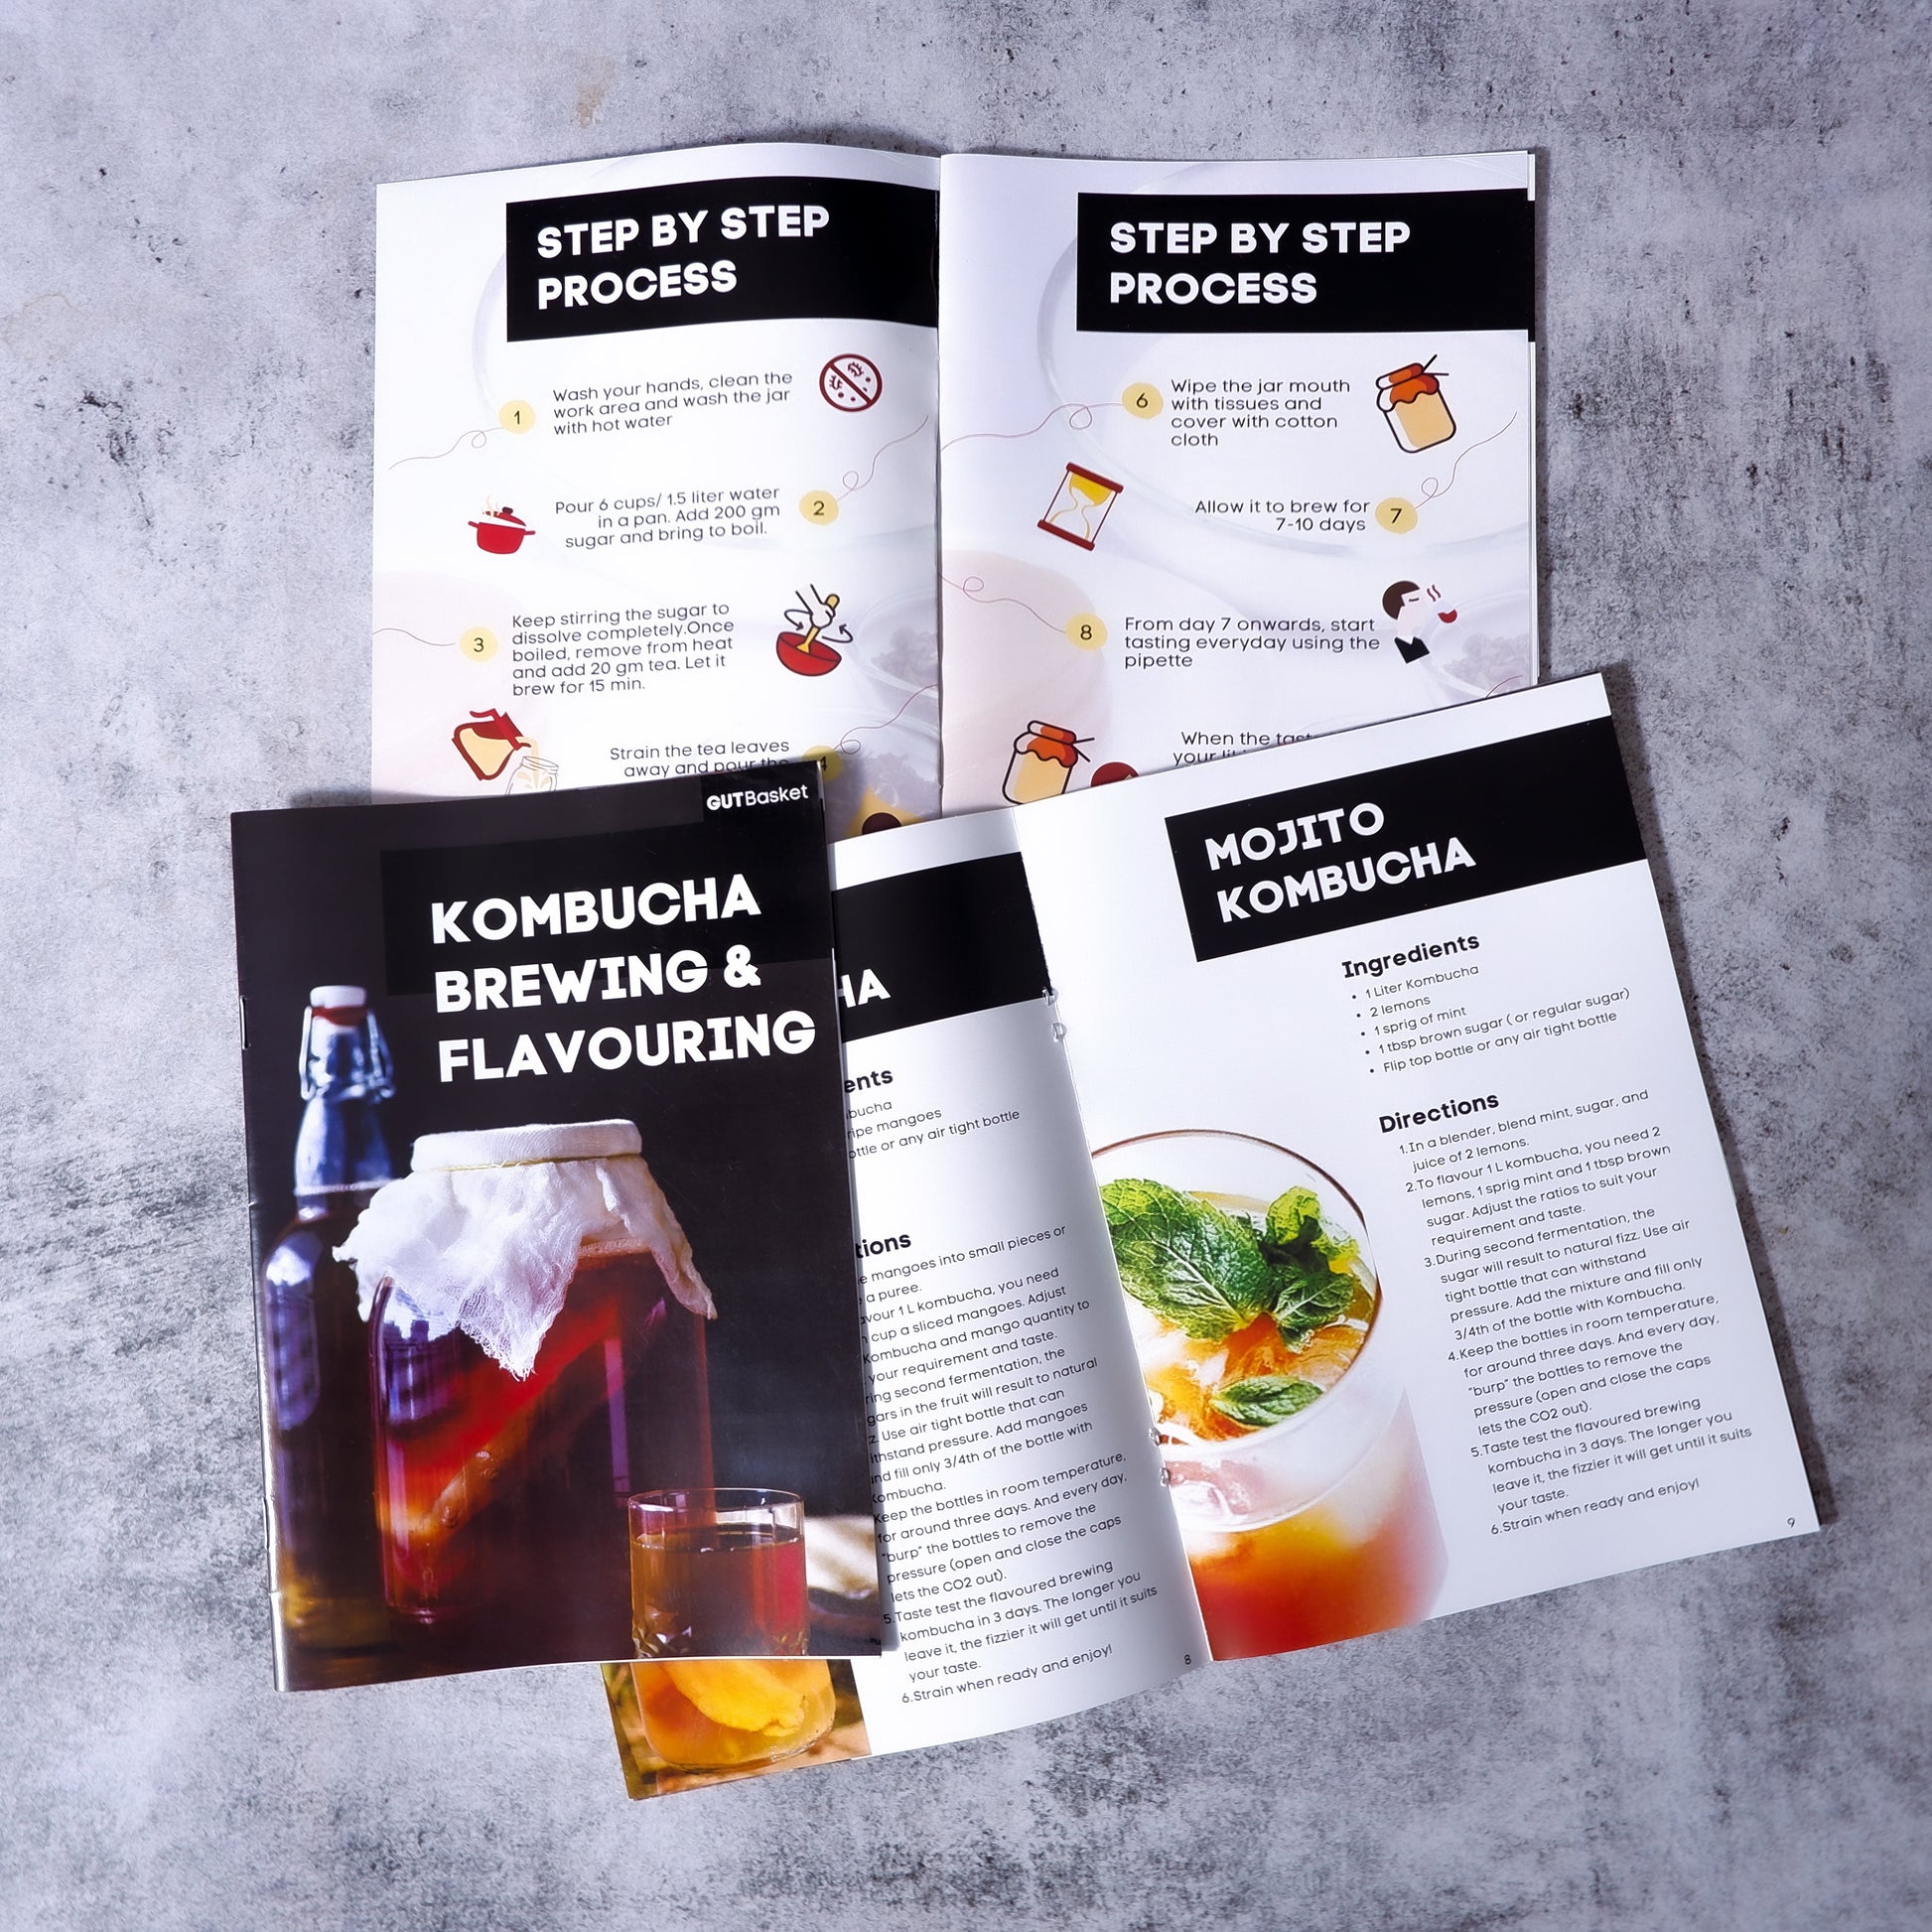 Kombucha Making Guide And Recipe Book - Gutbasket